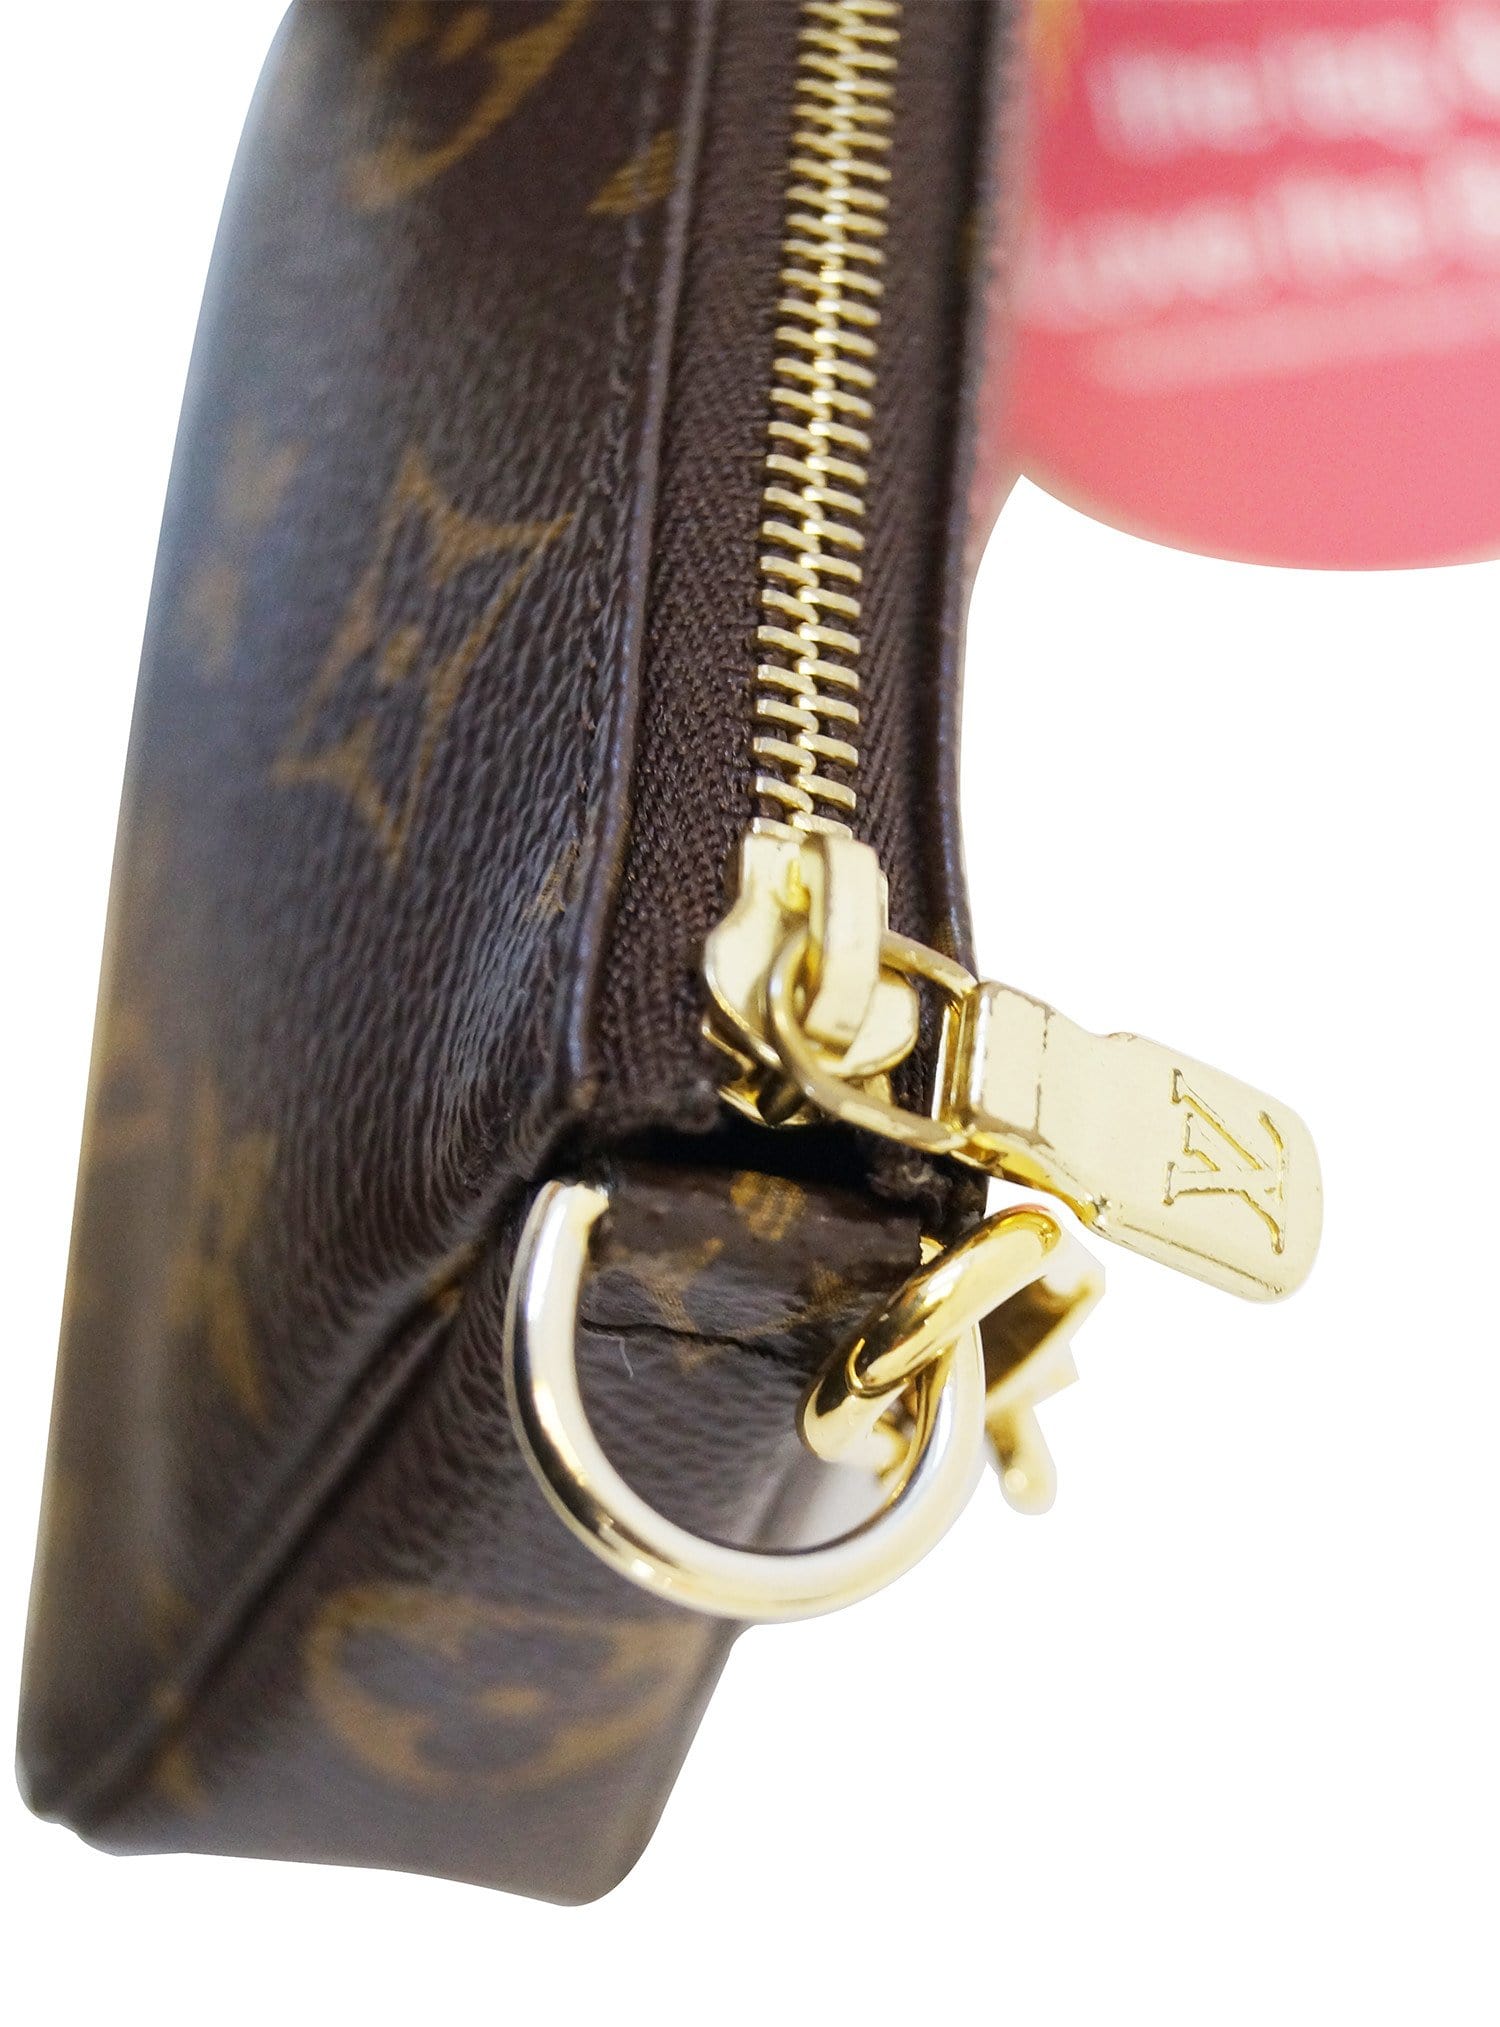 Louis Vuitton mini pochette accessoires. On website search for AO28912( monogram )/AO28910(azur) Free Shipping Worldwide✈️…